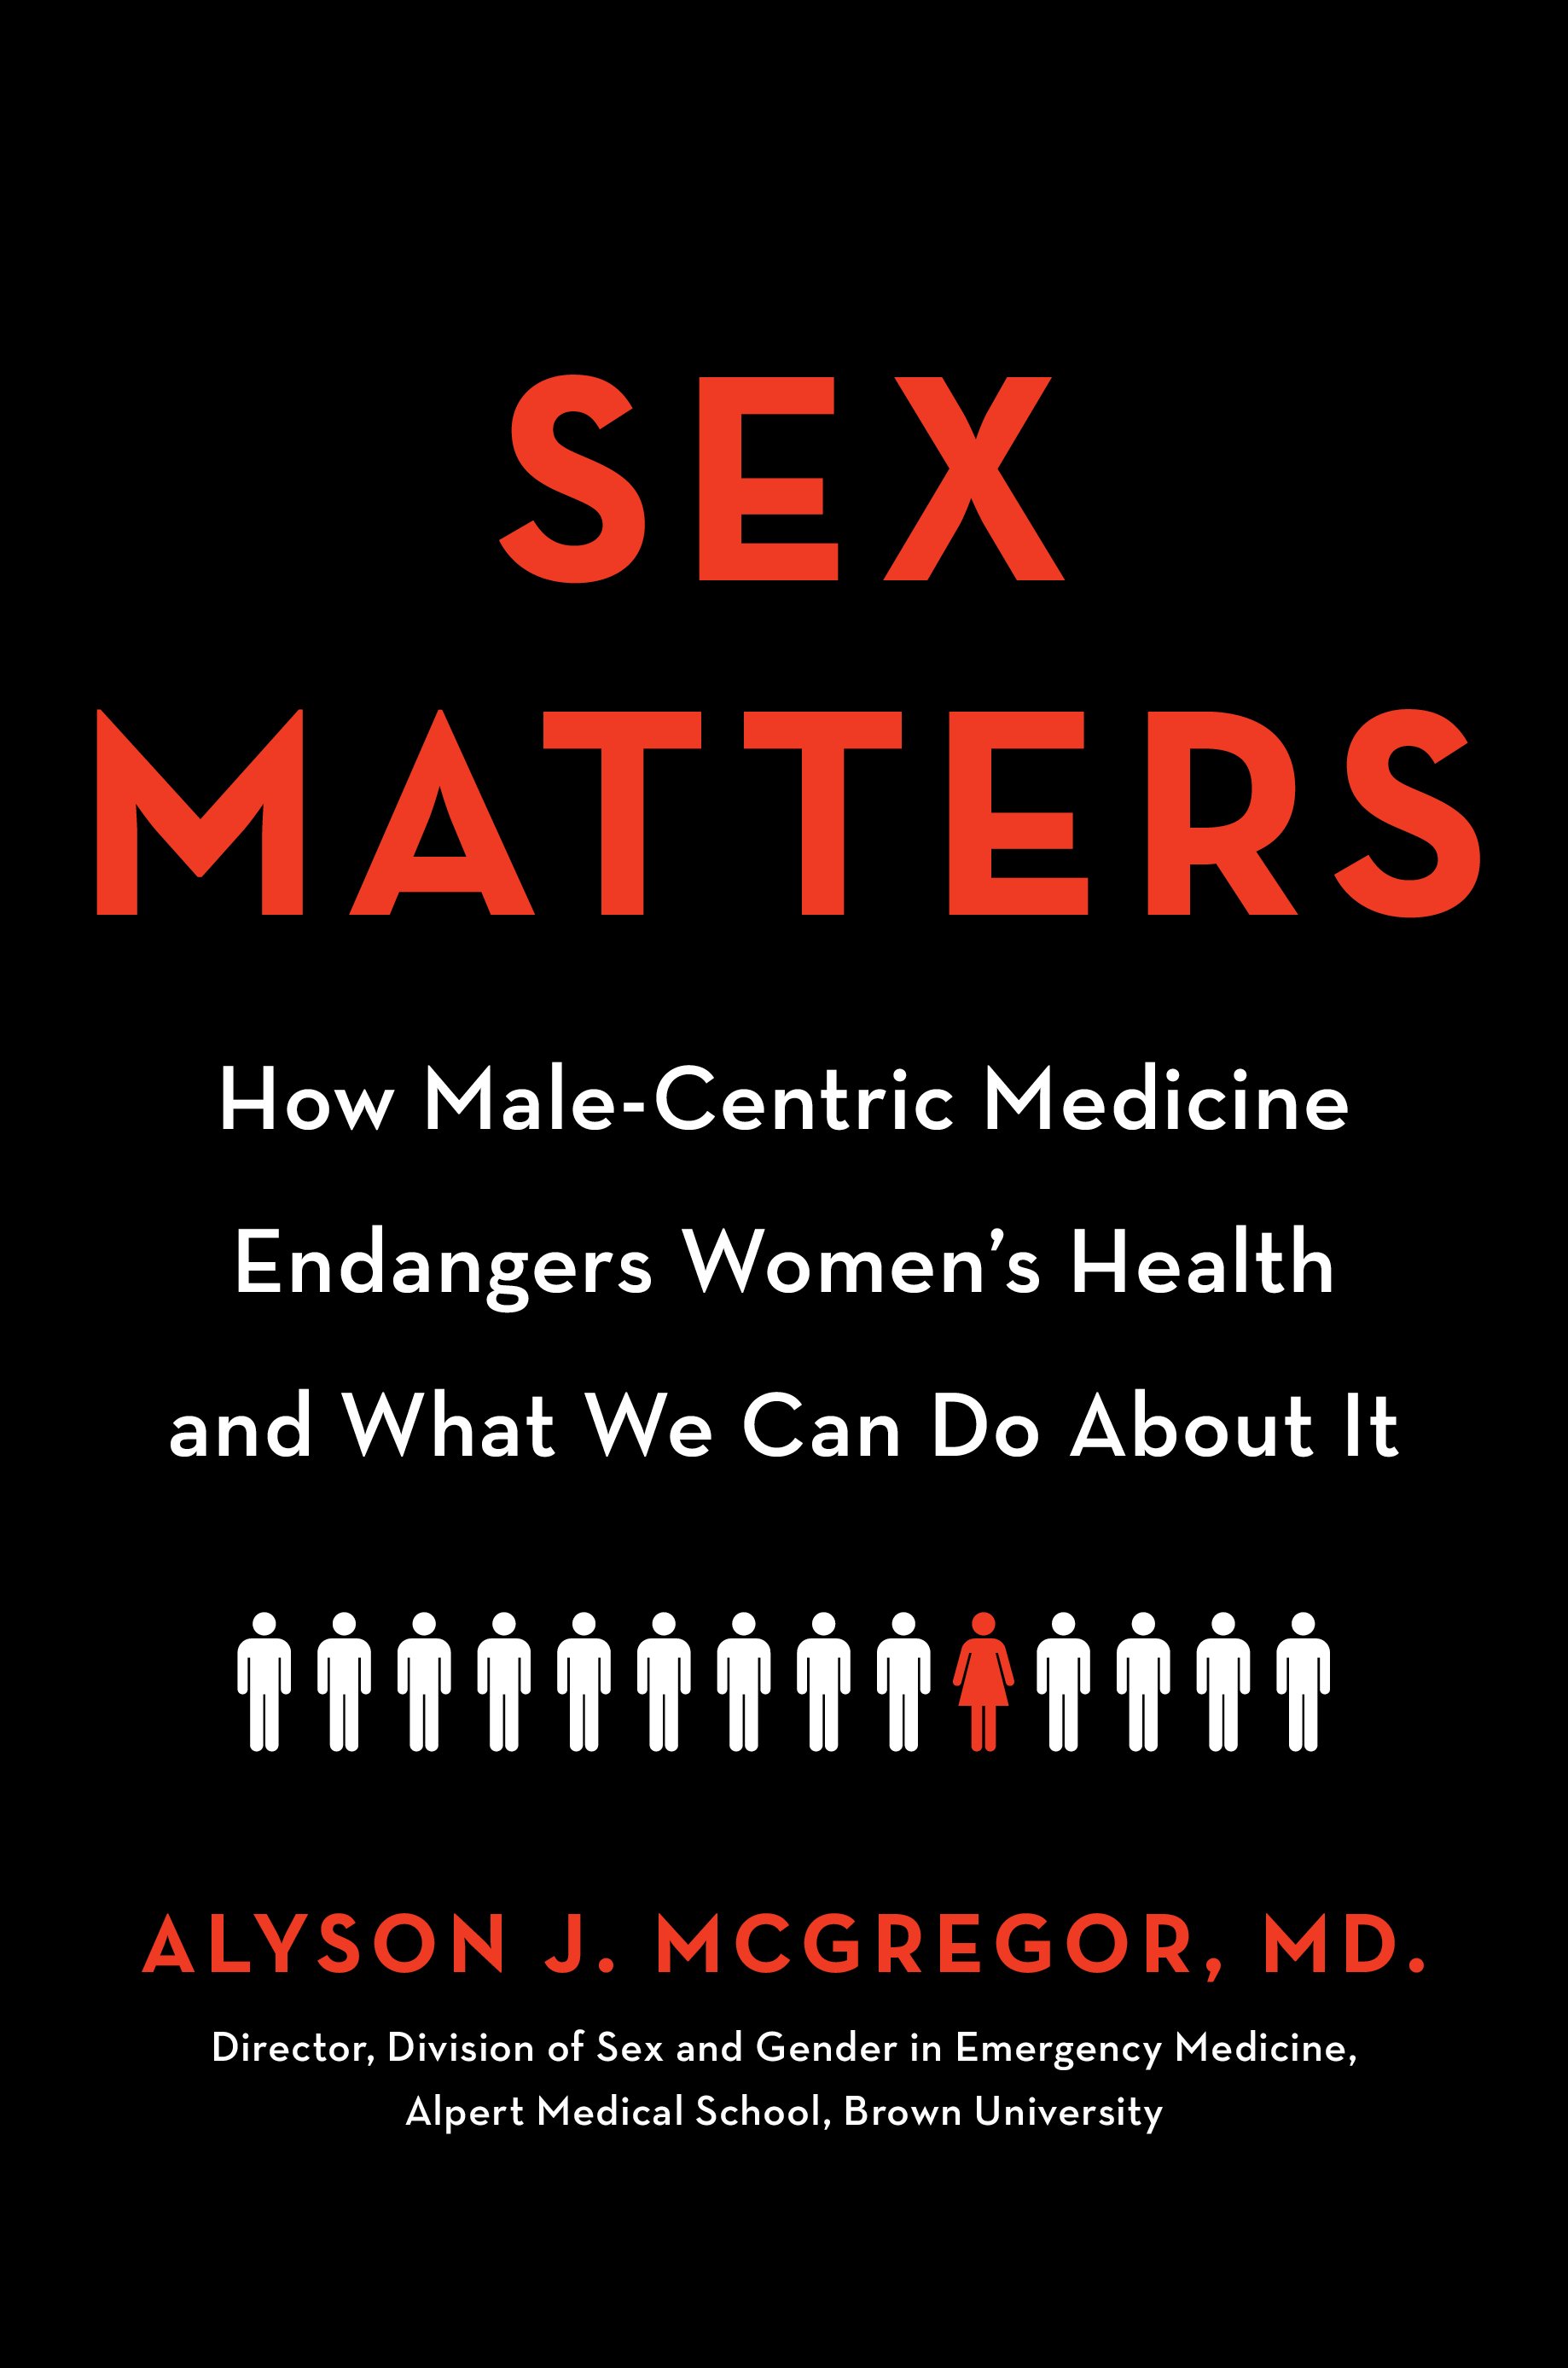 Sex Matters by Alyson J. McGregor, MD